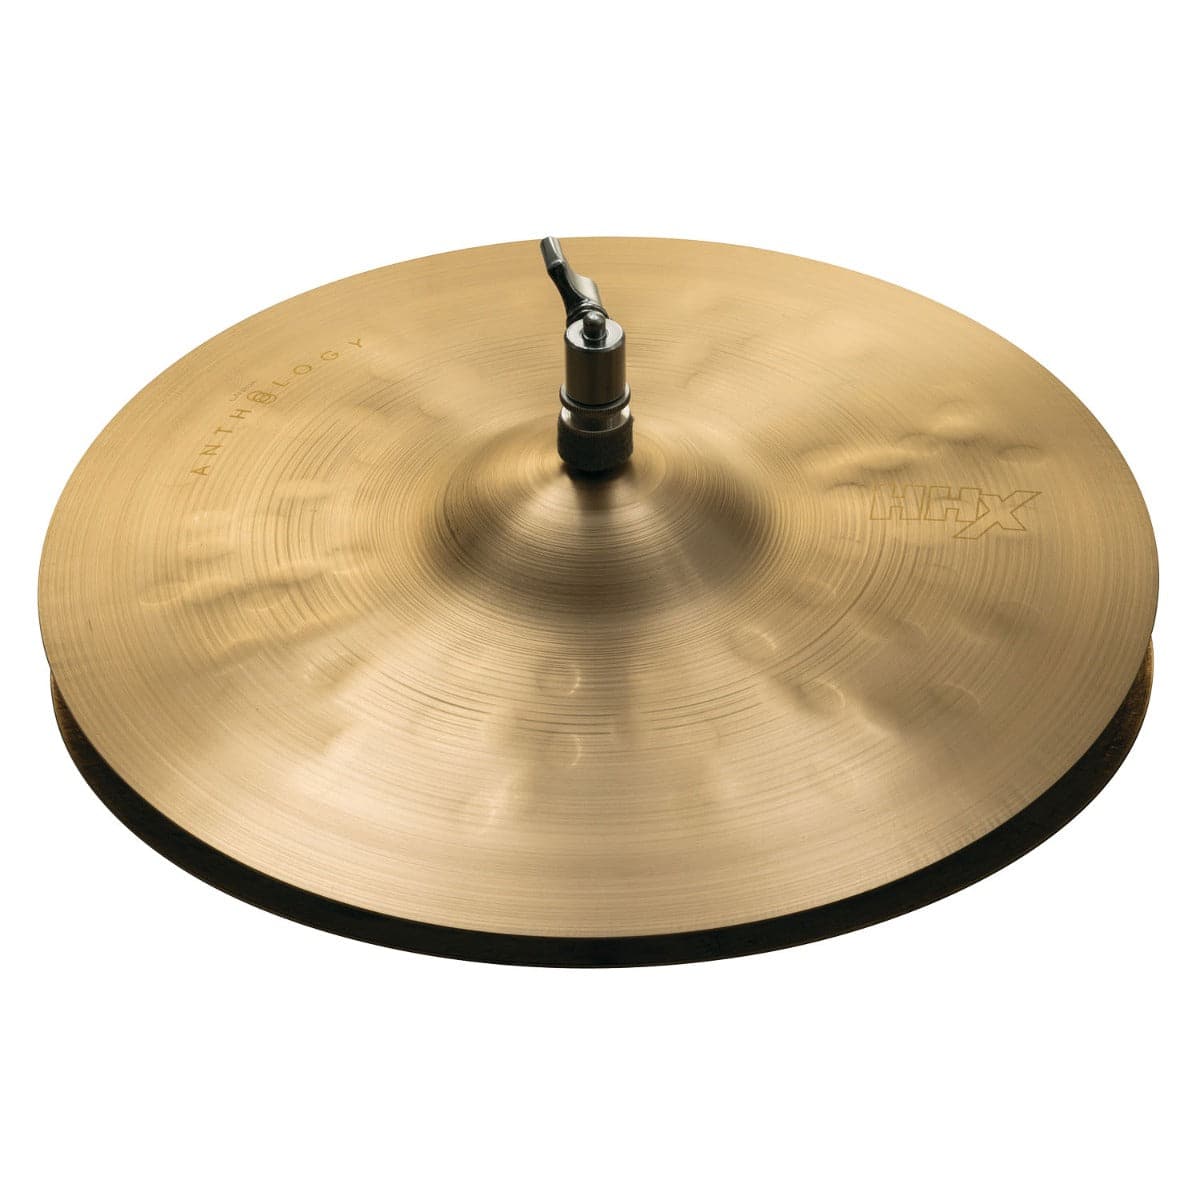 Sabian HHX Anthology High Bell Hi Hat Cymbals 14" 1054/1424 grams